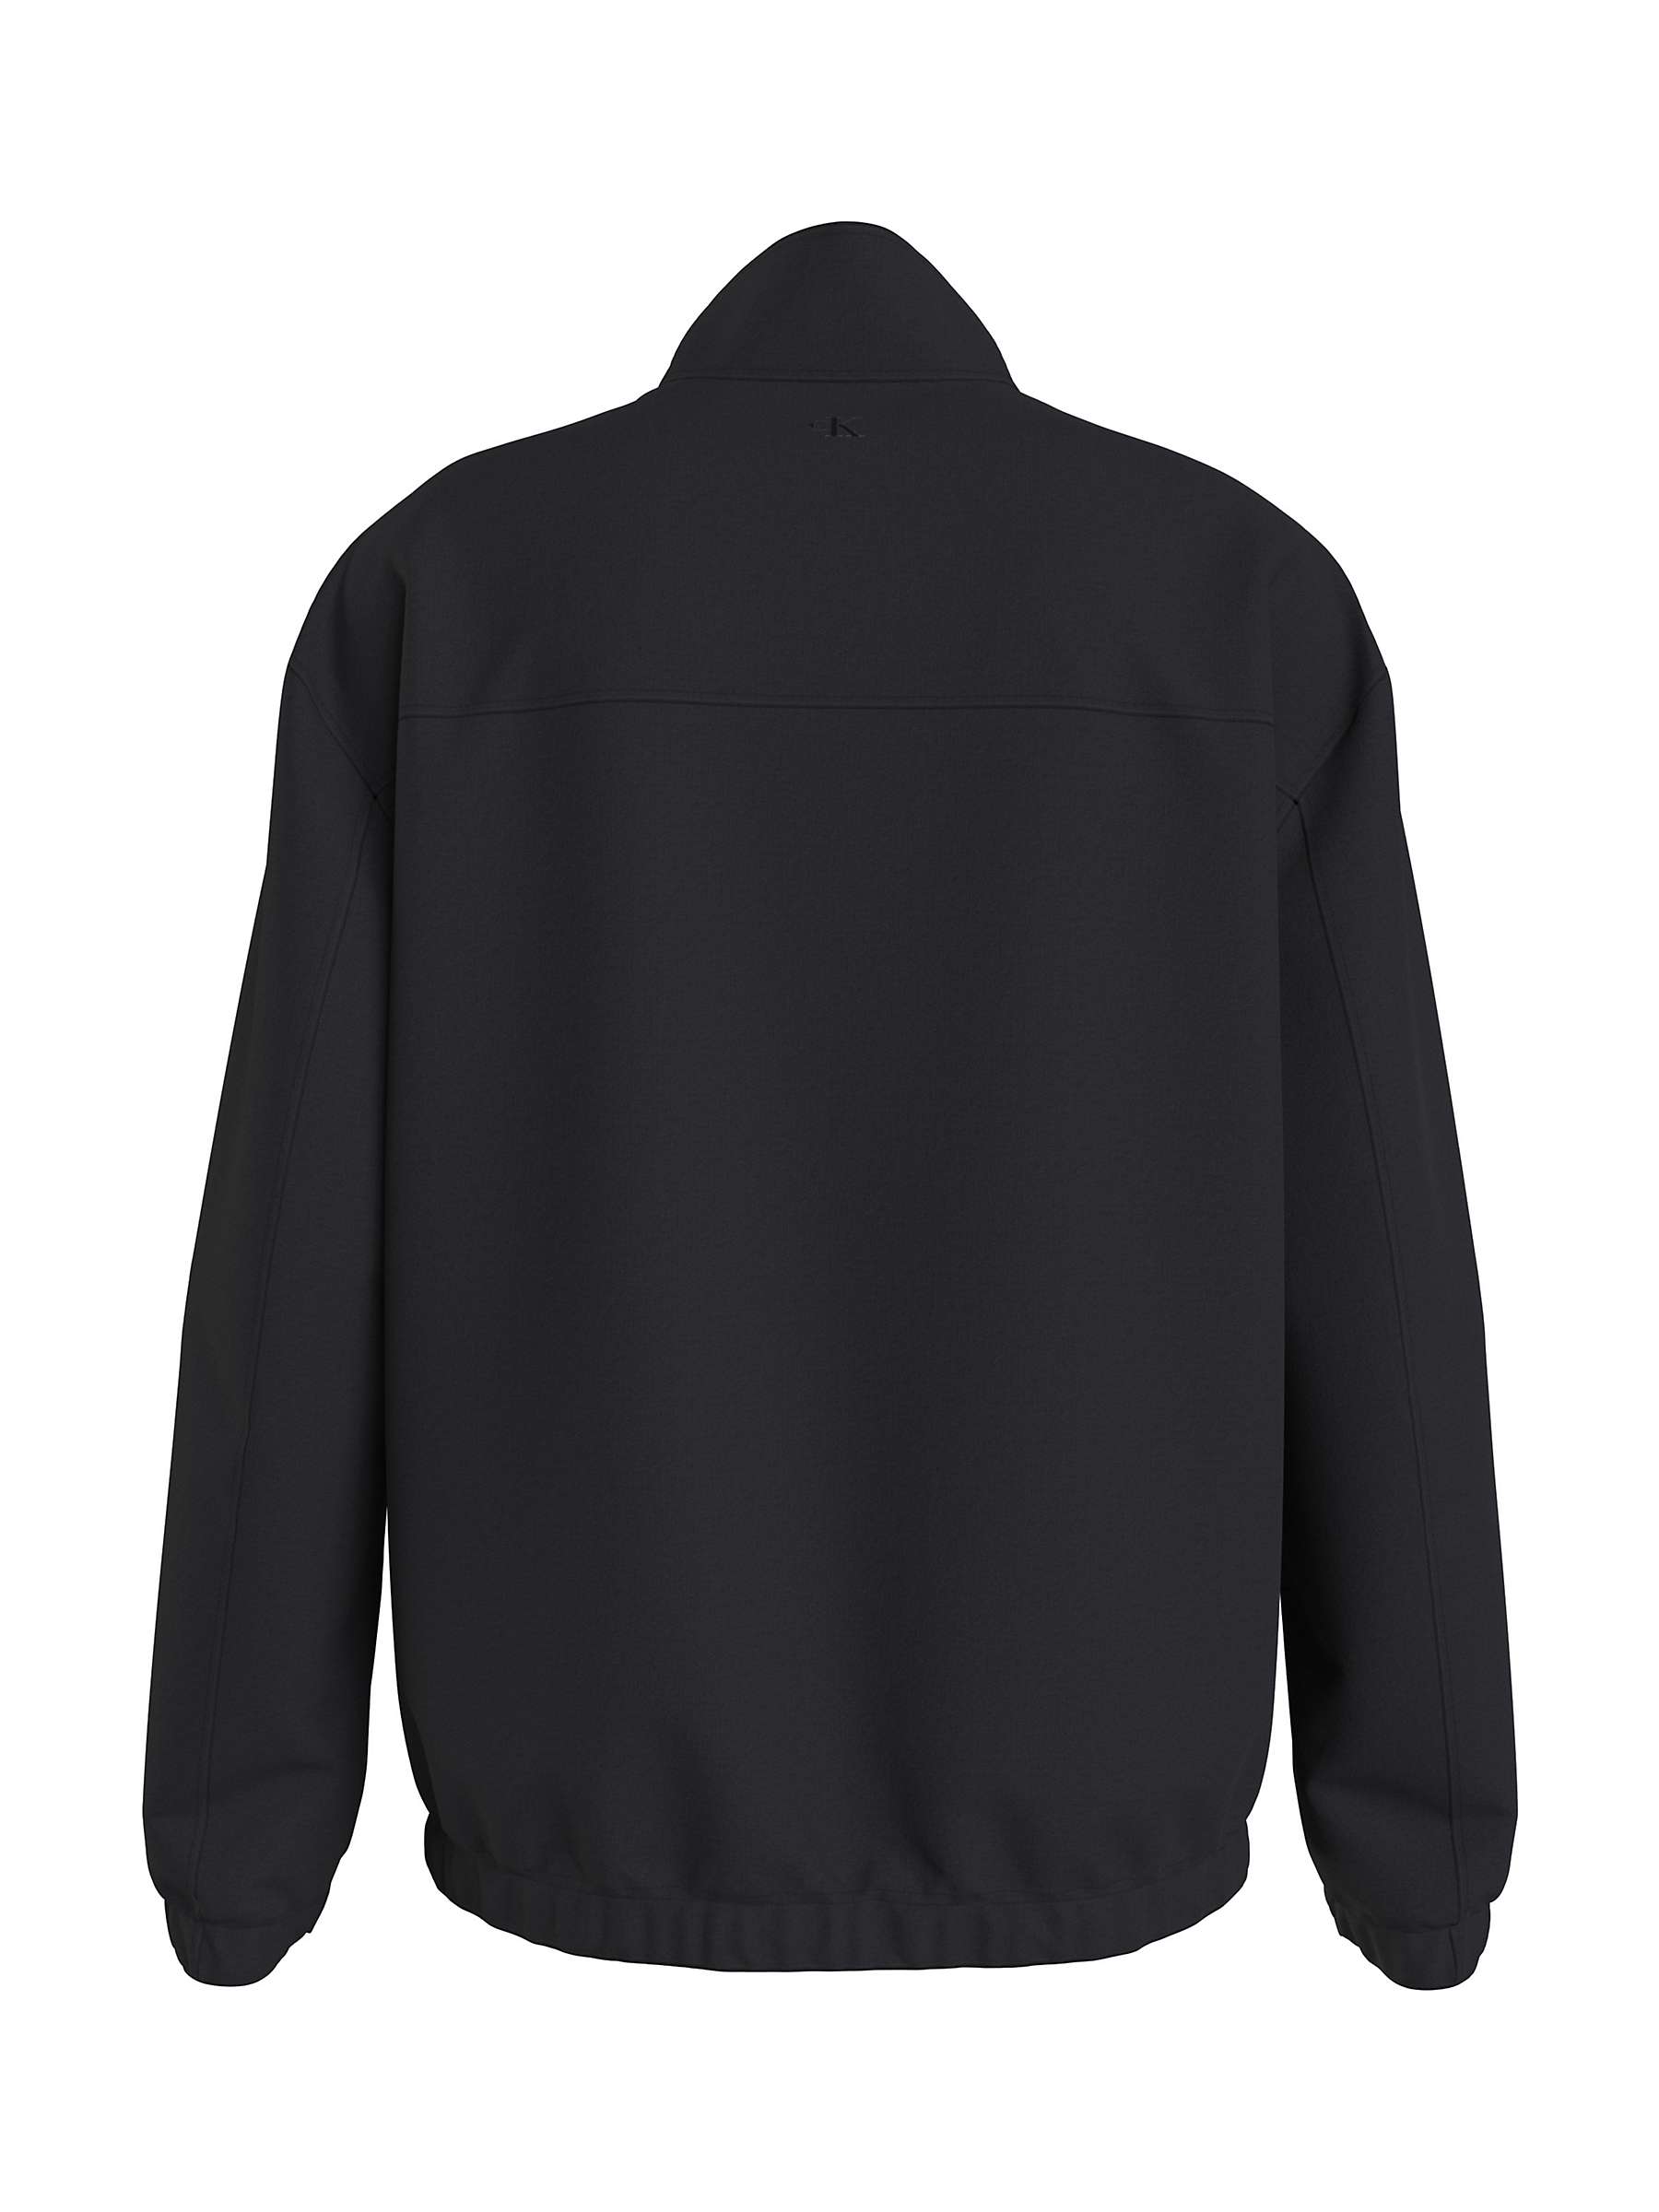 Buy Calvin Klein Calvin Klein Jeans Technical Repeat Logo Zip Jacket, Black Online at johnlewis.com